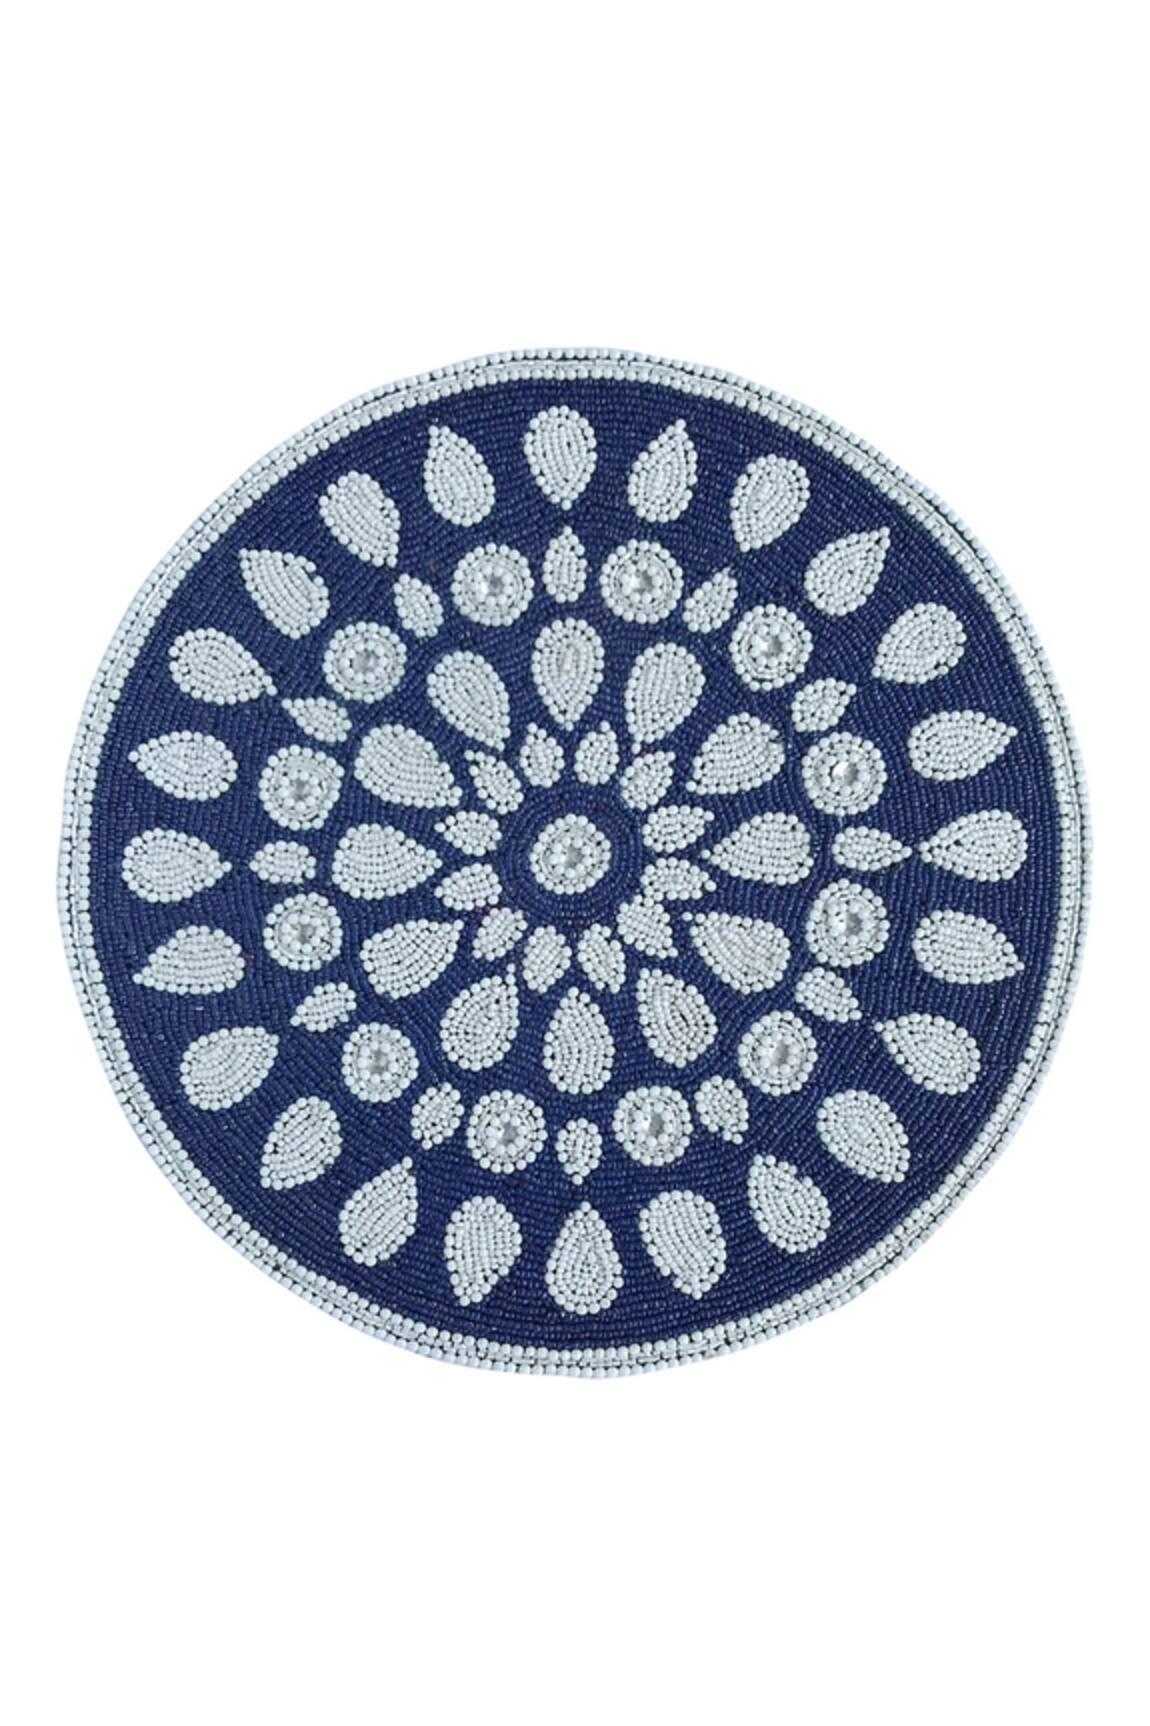 CocoBee Mandala Design Beads Embellished Placemat